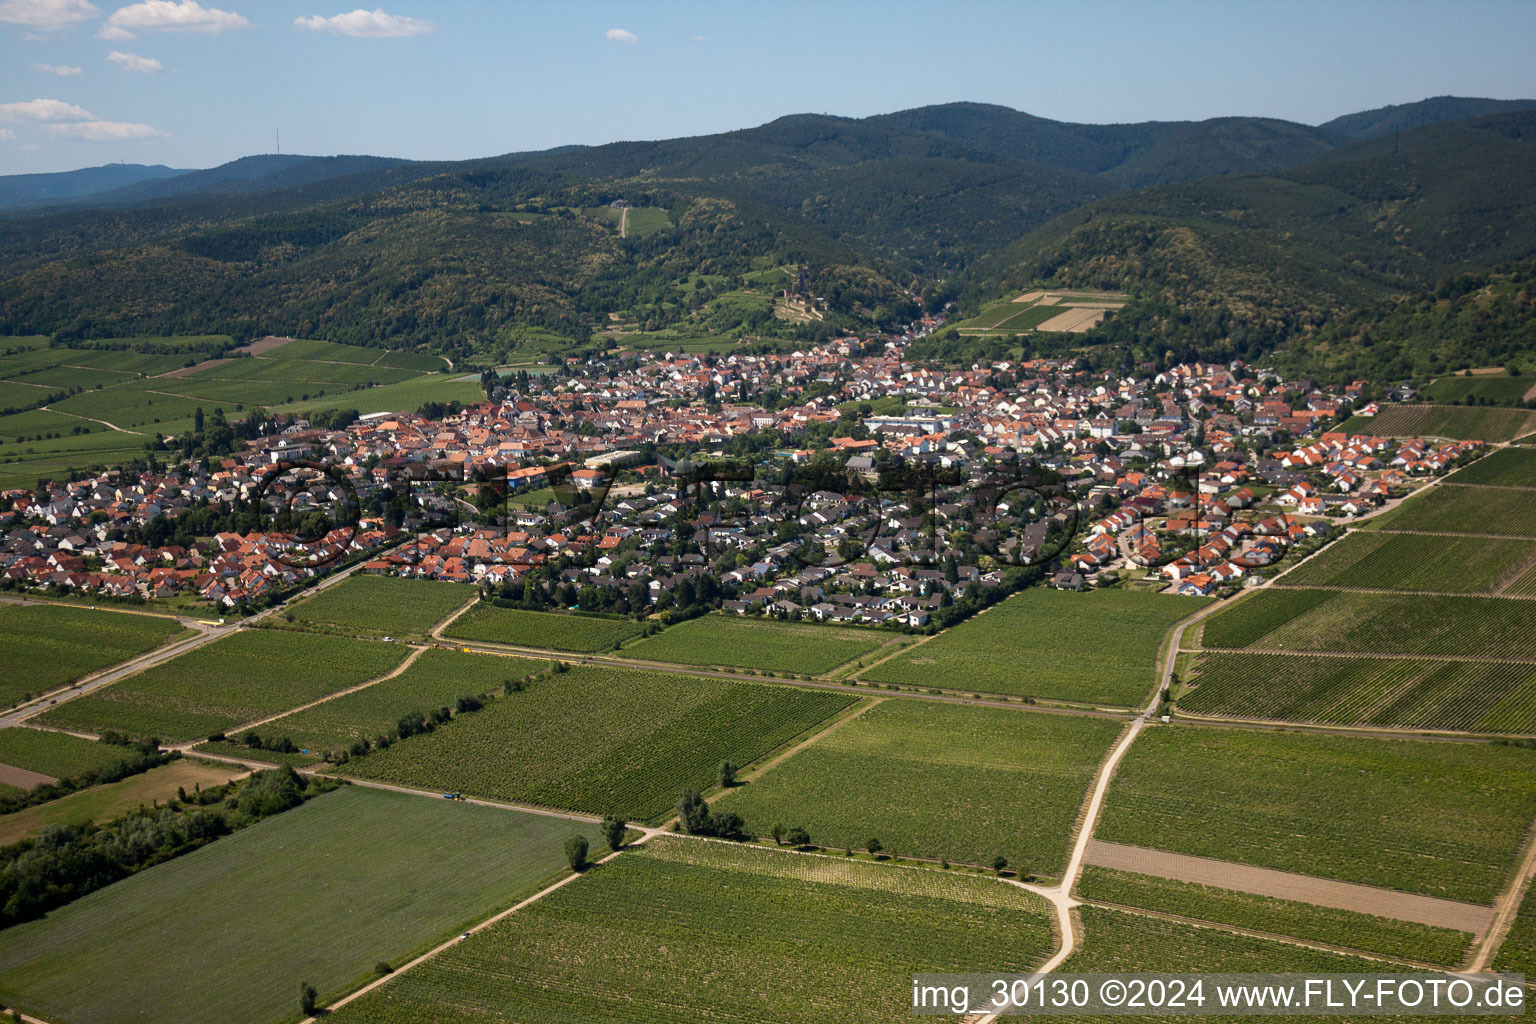 Wachenheim an der Weinstraße in the state Rhineland-Palatinate, Germany from a drone